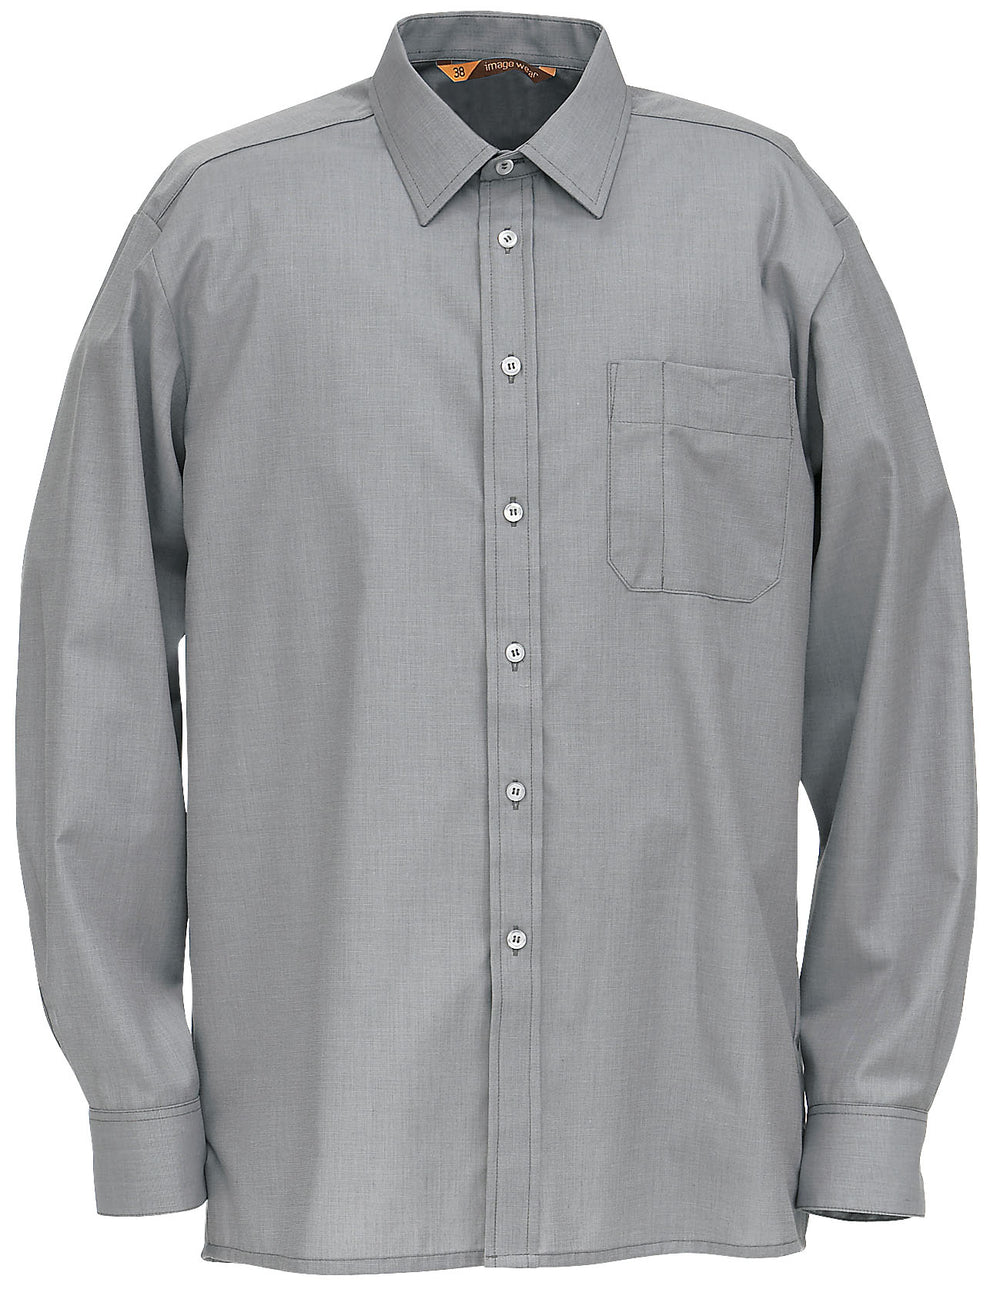 Men's long-sleeved collared shirt